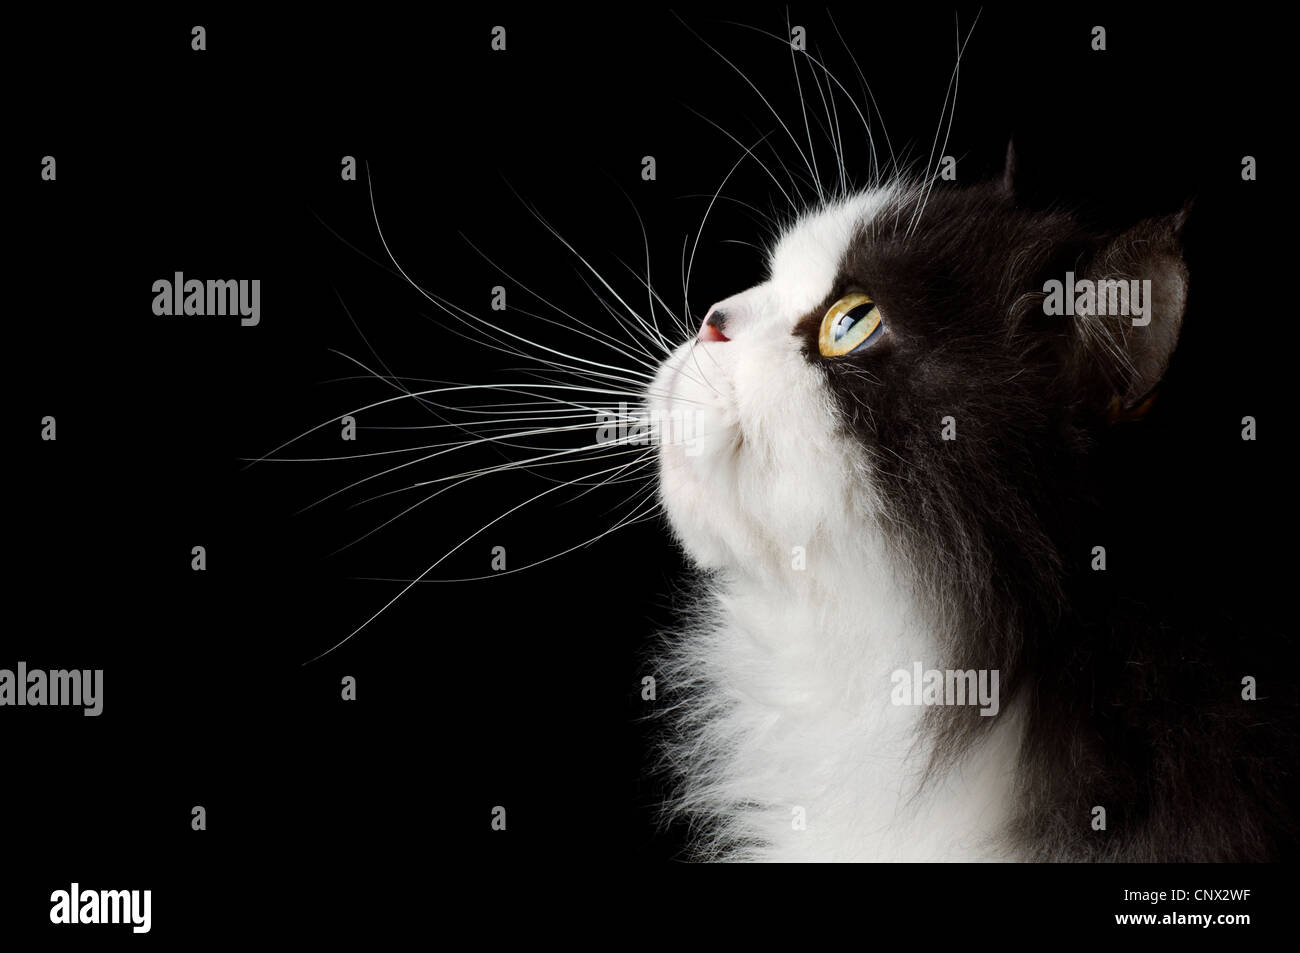 Head portrait of cat on black background Stock Photo